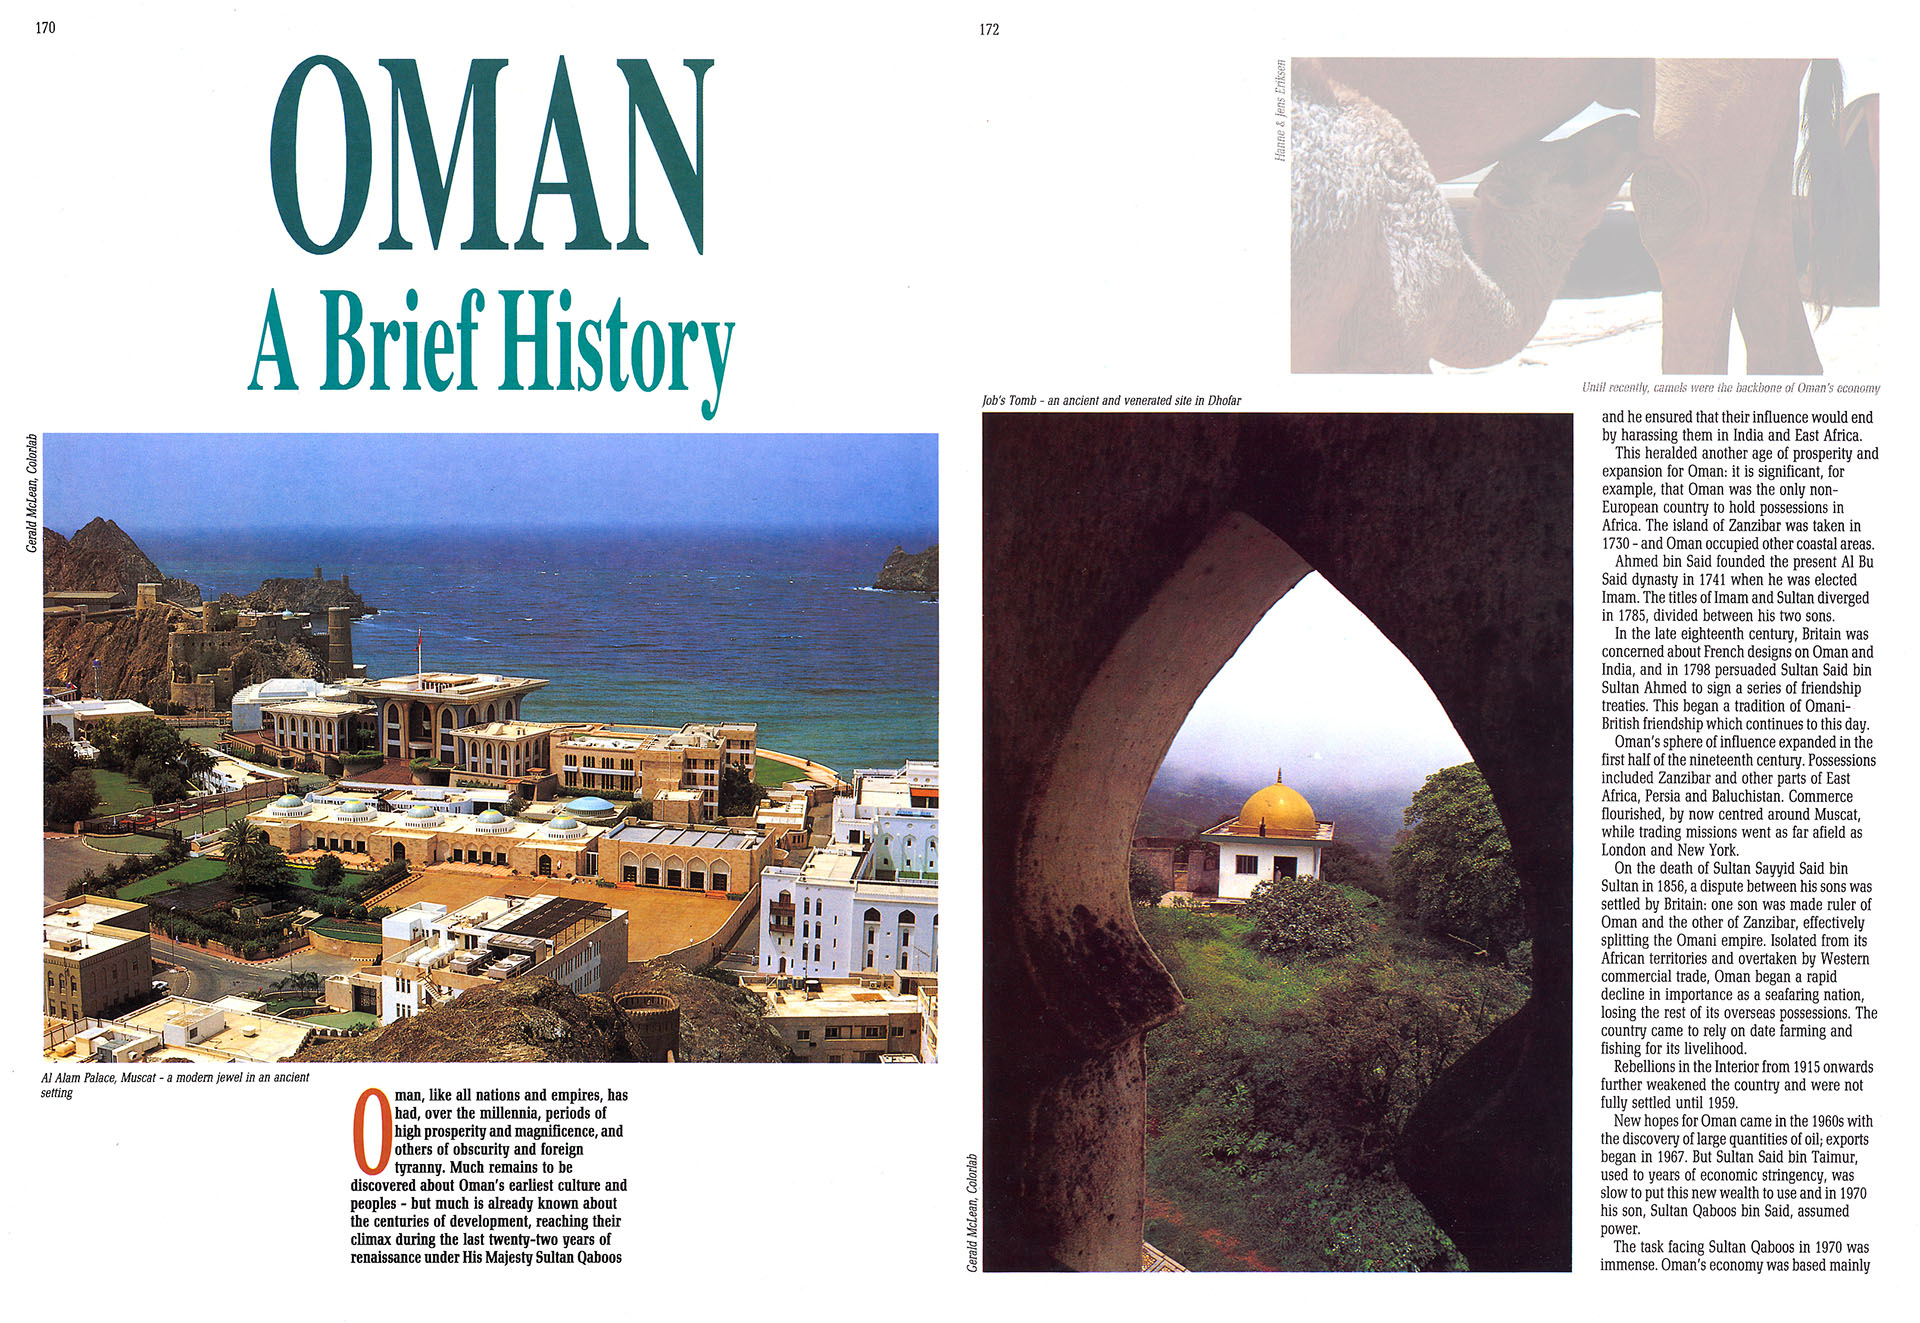 Tribute to Oman magazine article